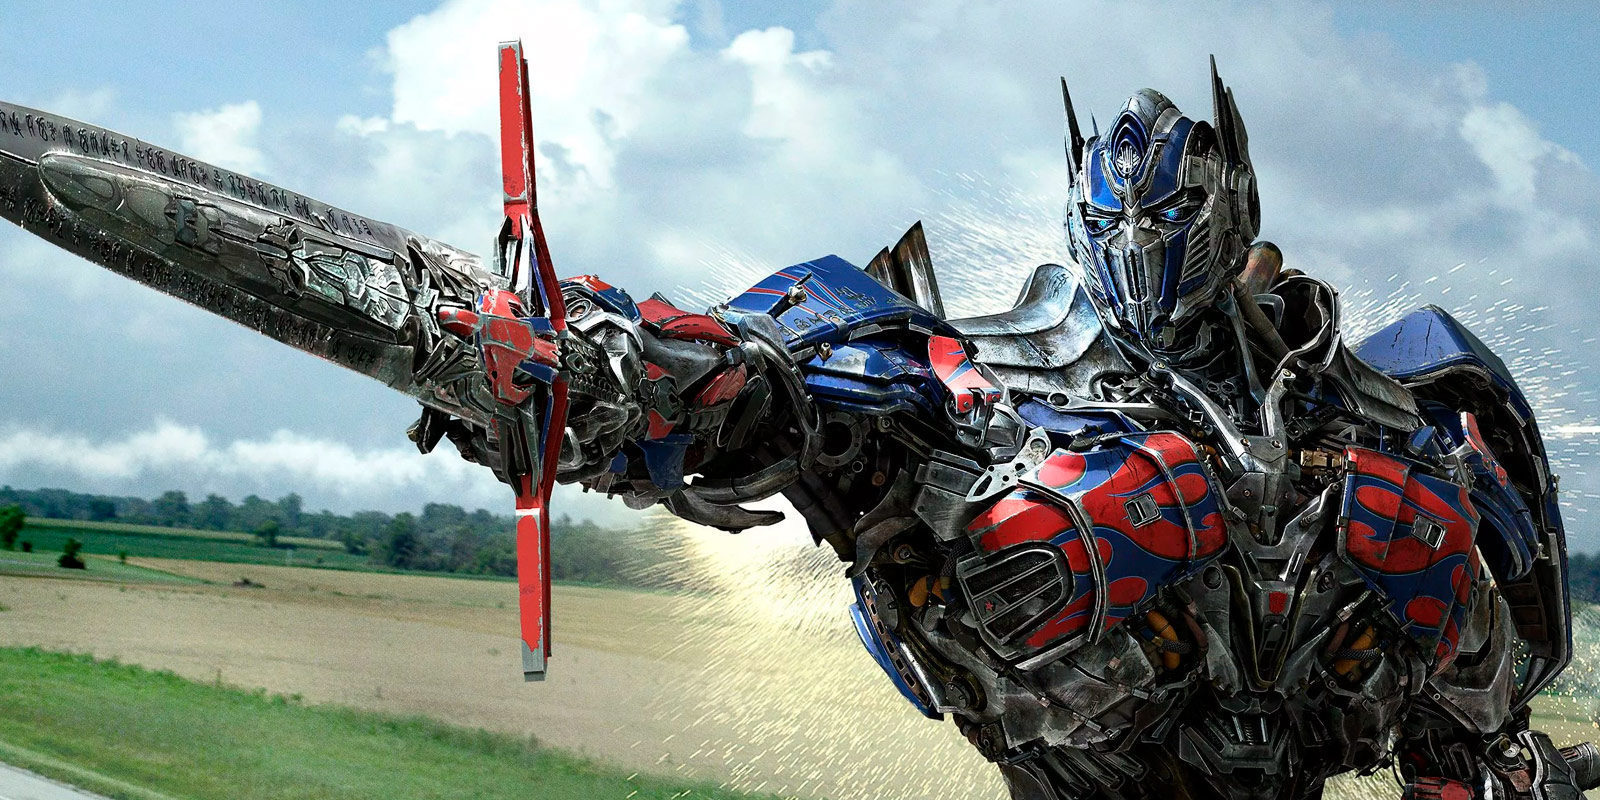 Primera imagen de Optimus Prime en 'Transformers: The Last Knight'